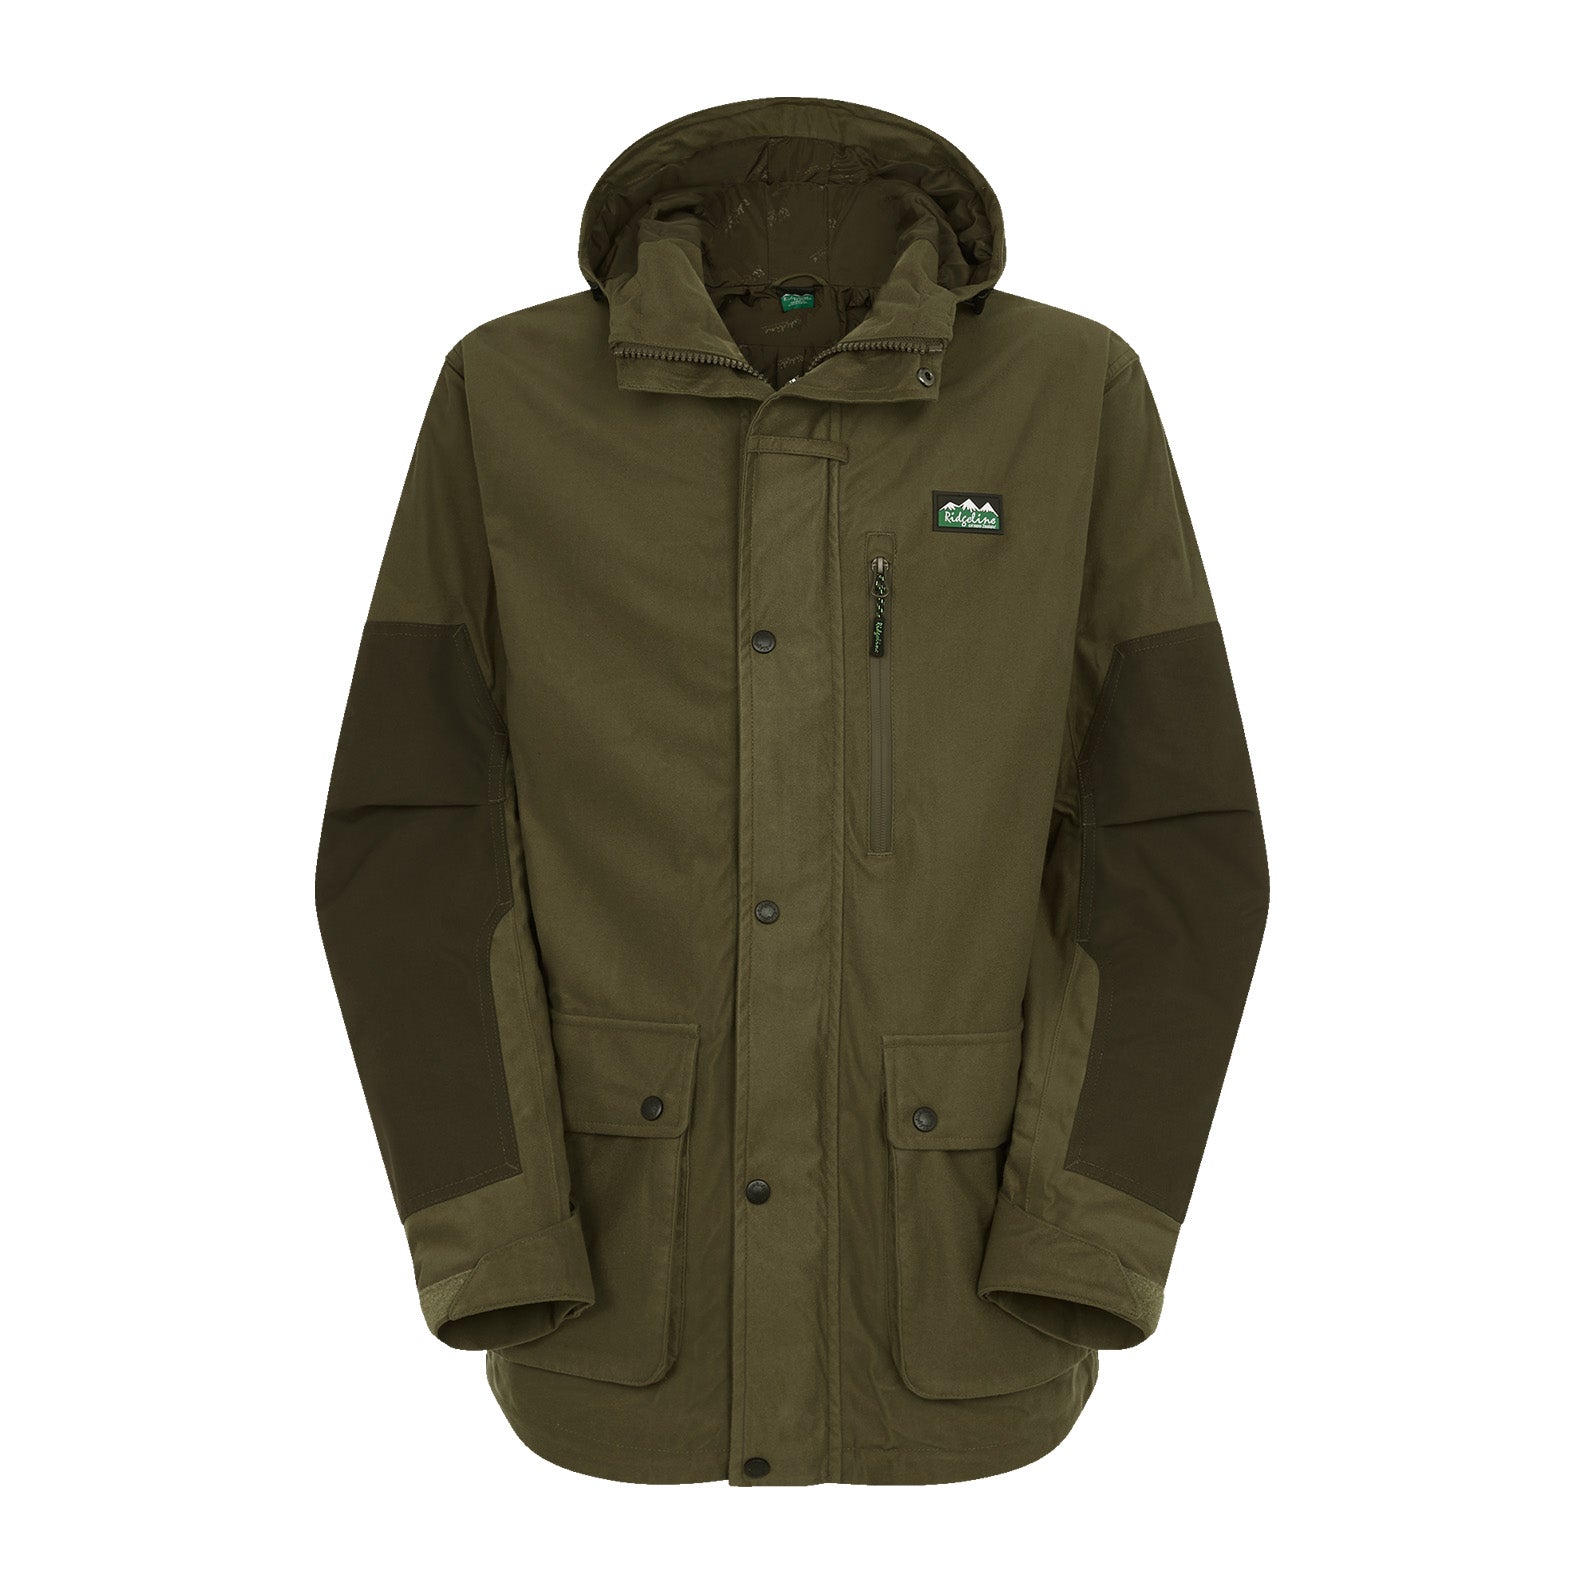 Pintail Explorer Jacket| New Clothing